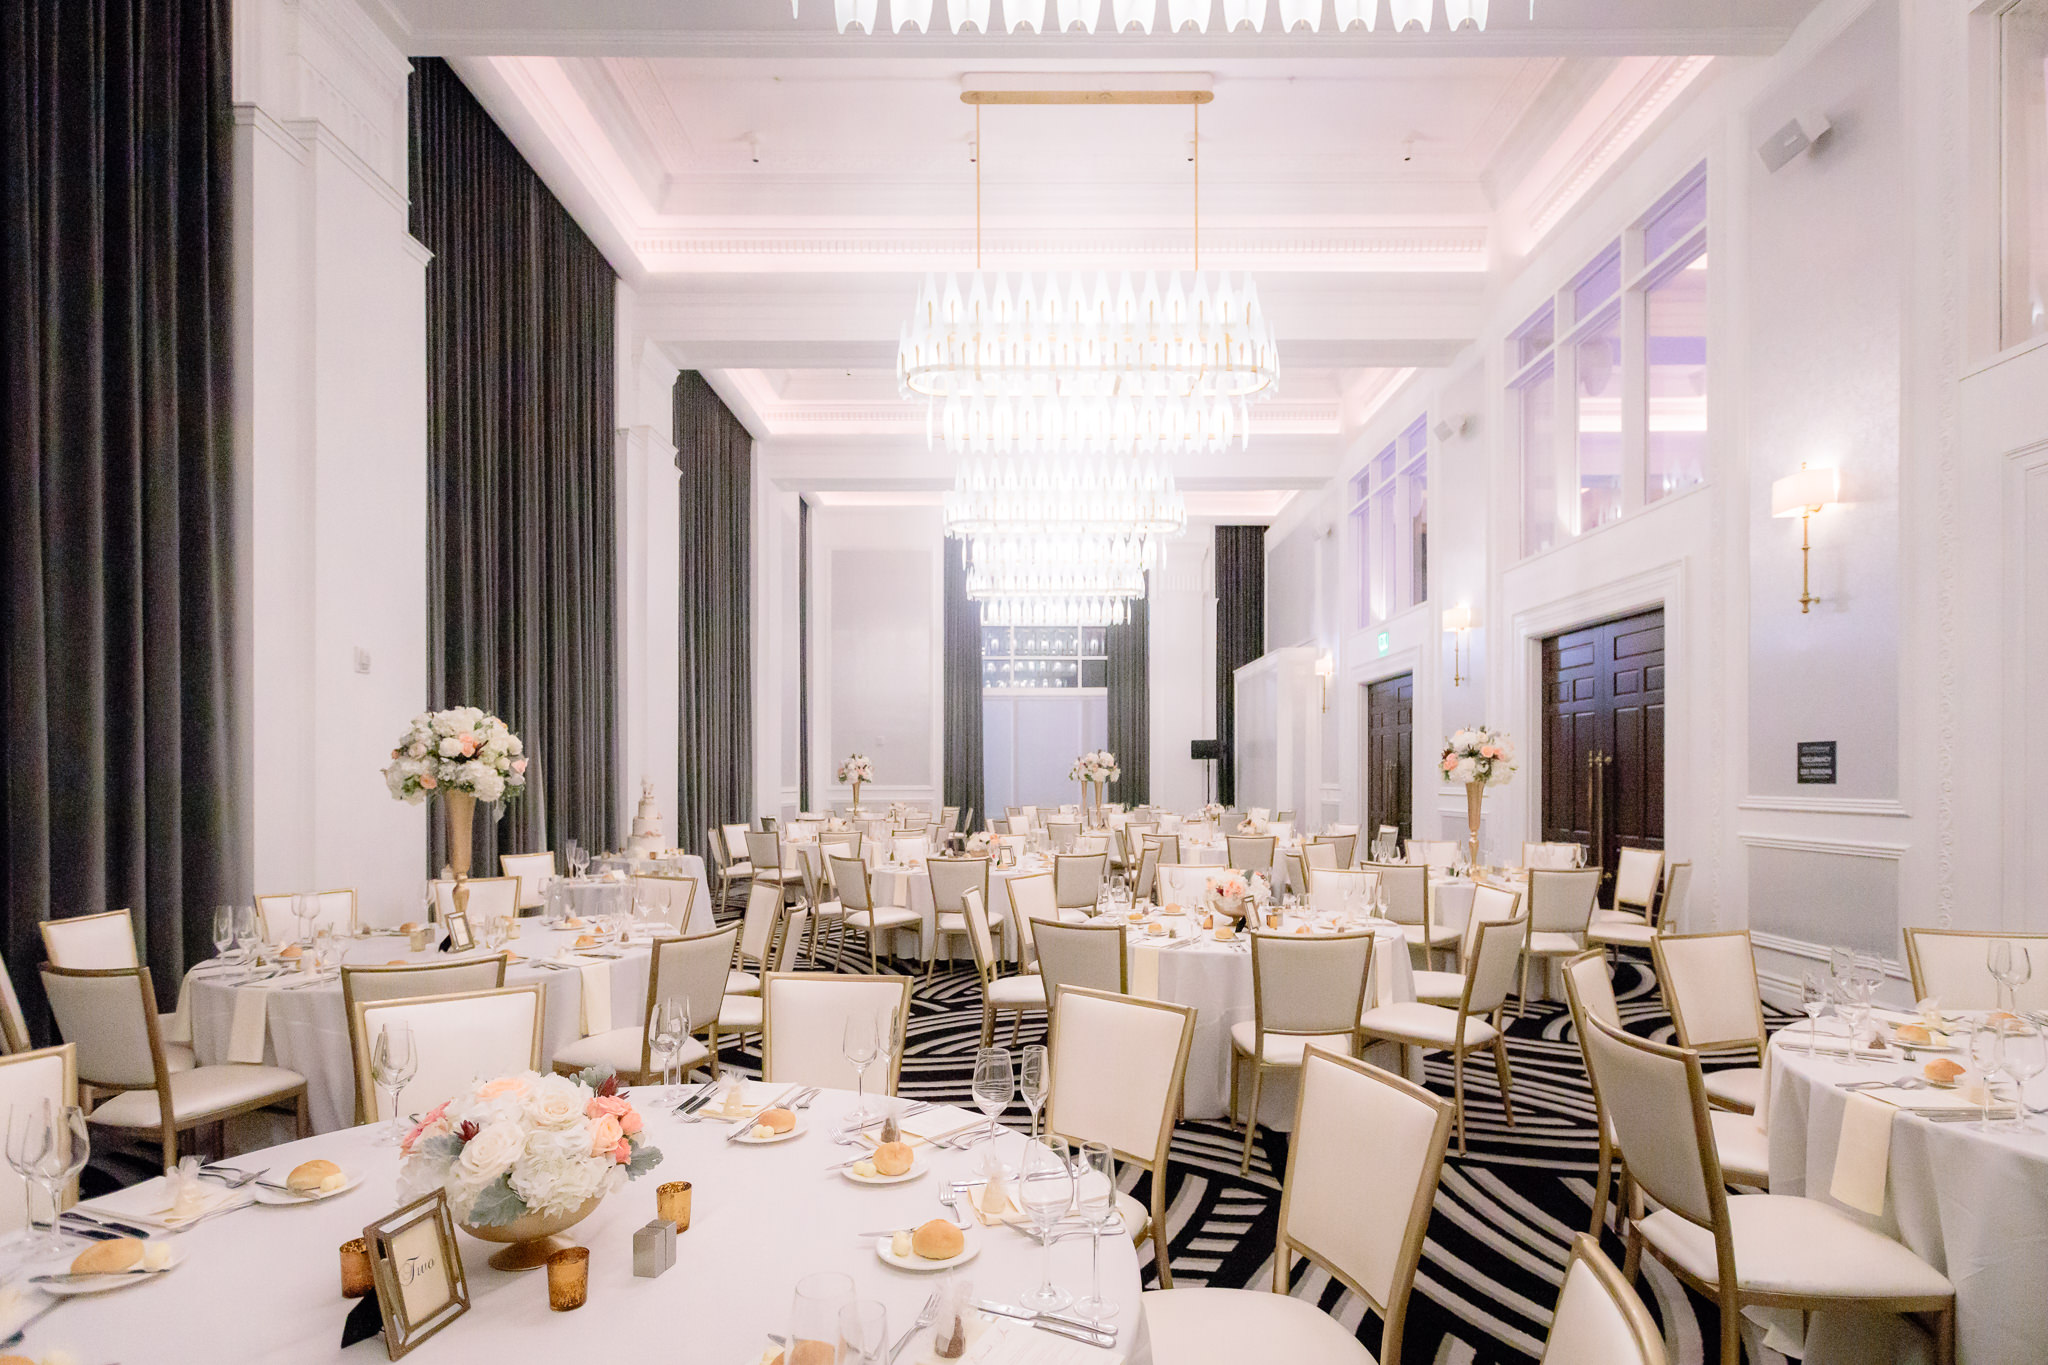 Sheffield Ballroom of Pittsburgh's Hotel Monaco set up for a December wedding